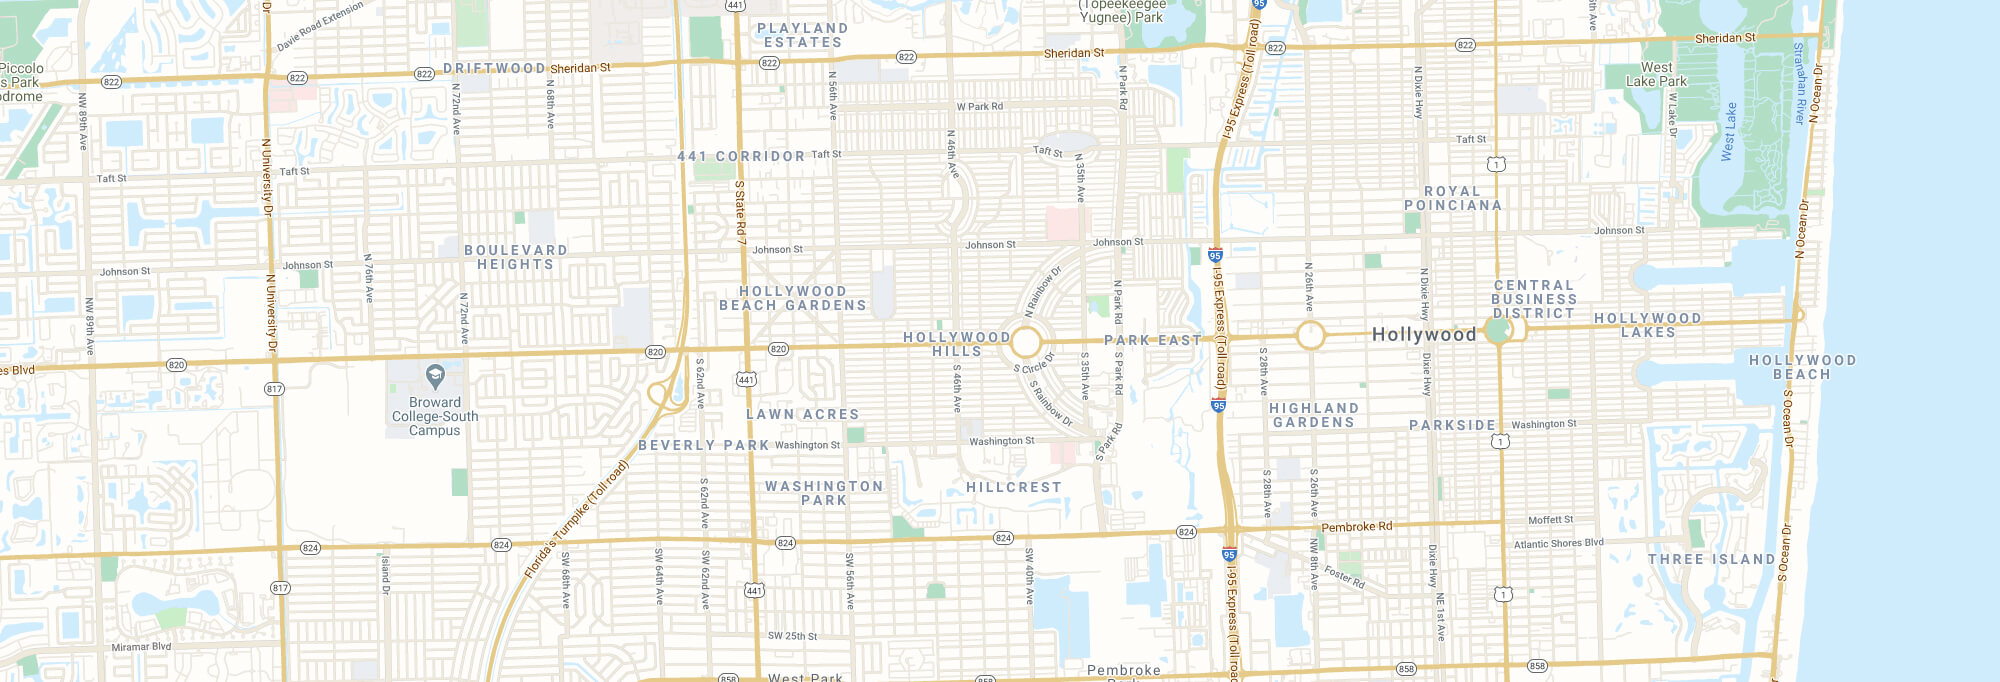 Hollywood city map